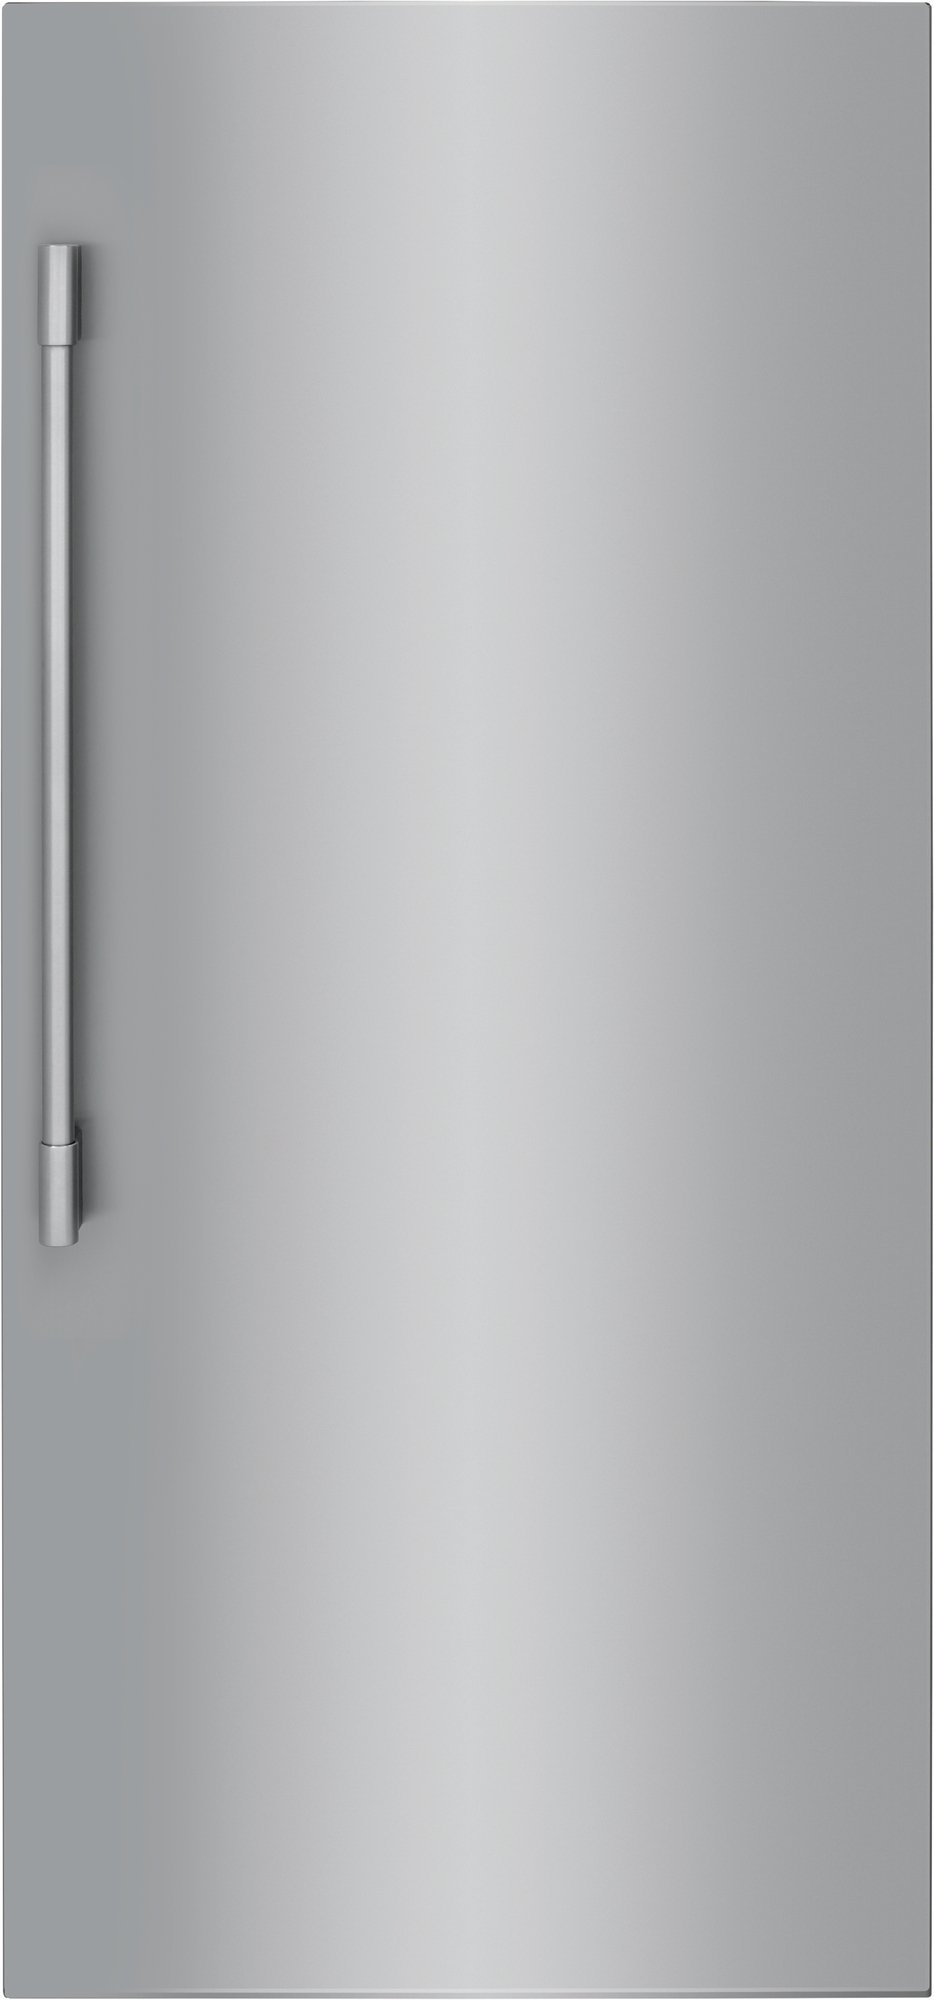 Stainless steel Frigidaire freezerless refrigerator